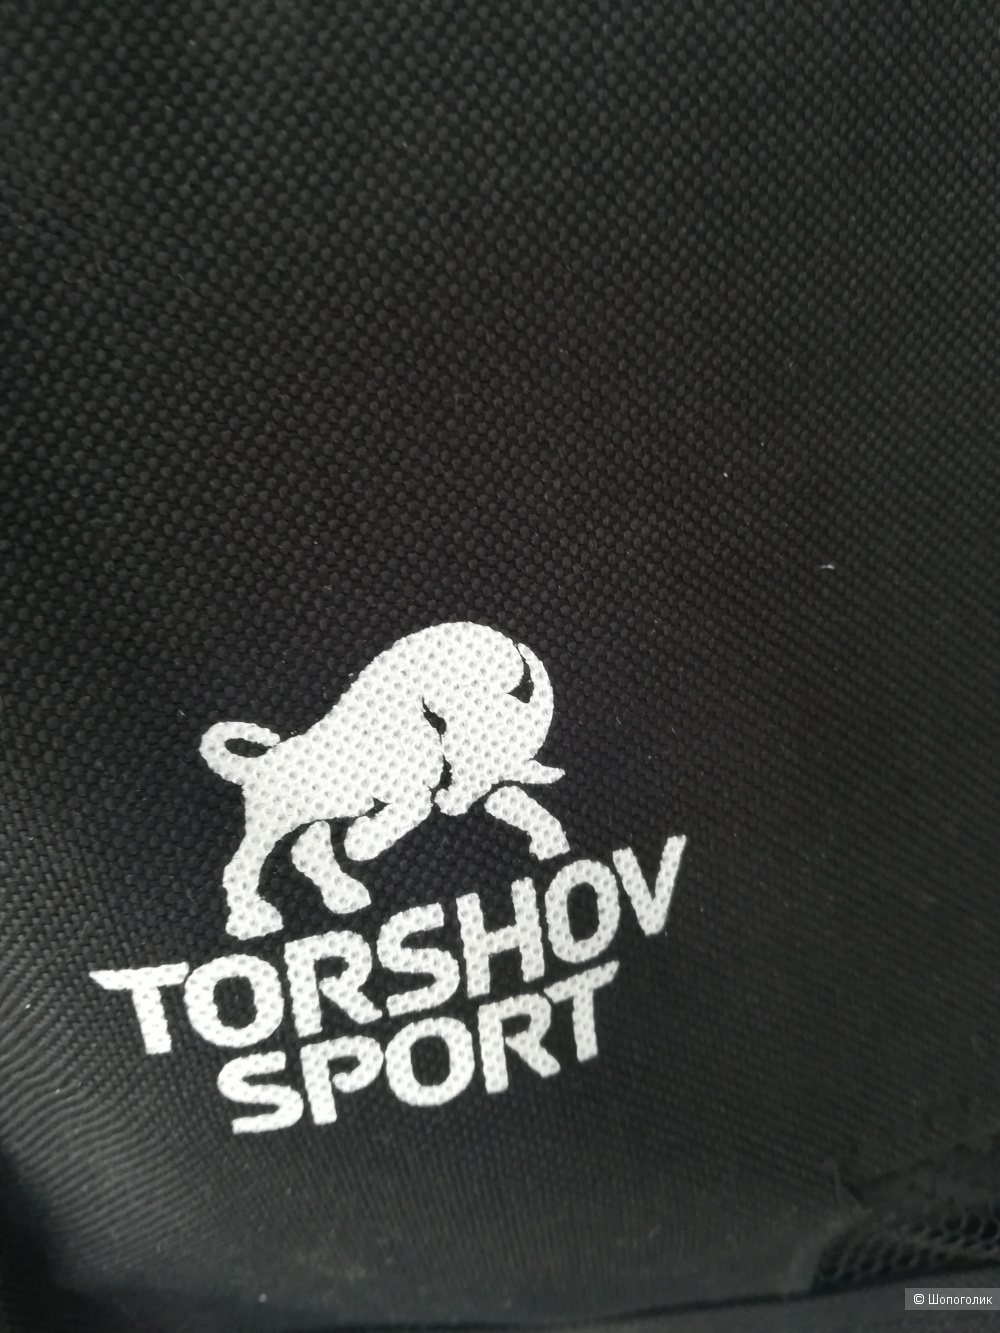 Рюкзак Torshov sport,27x30